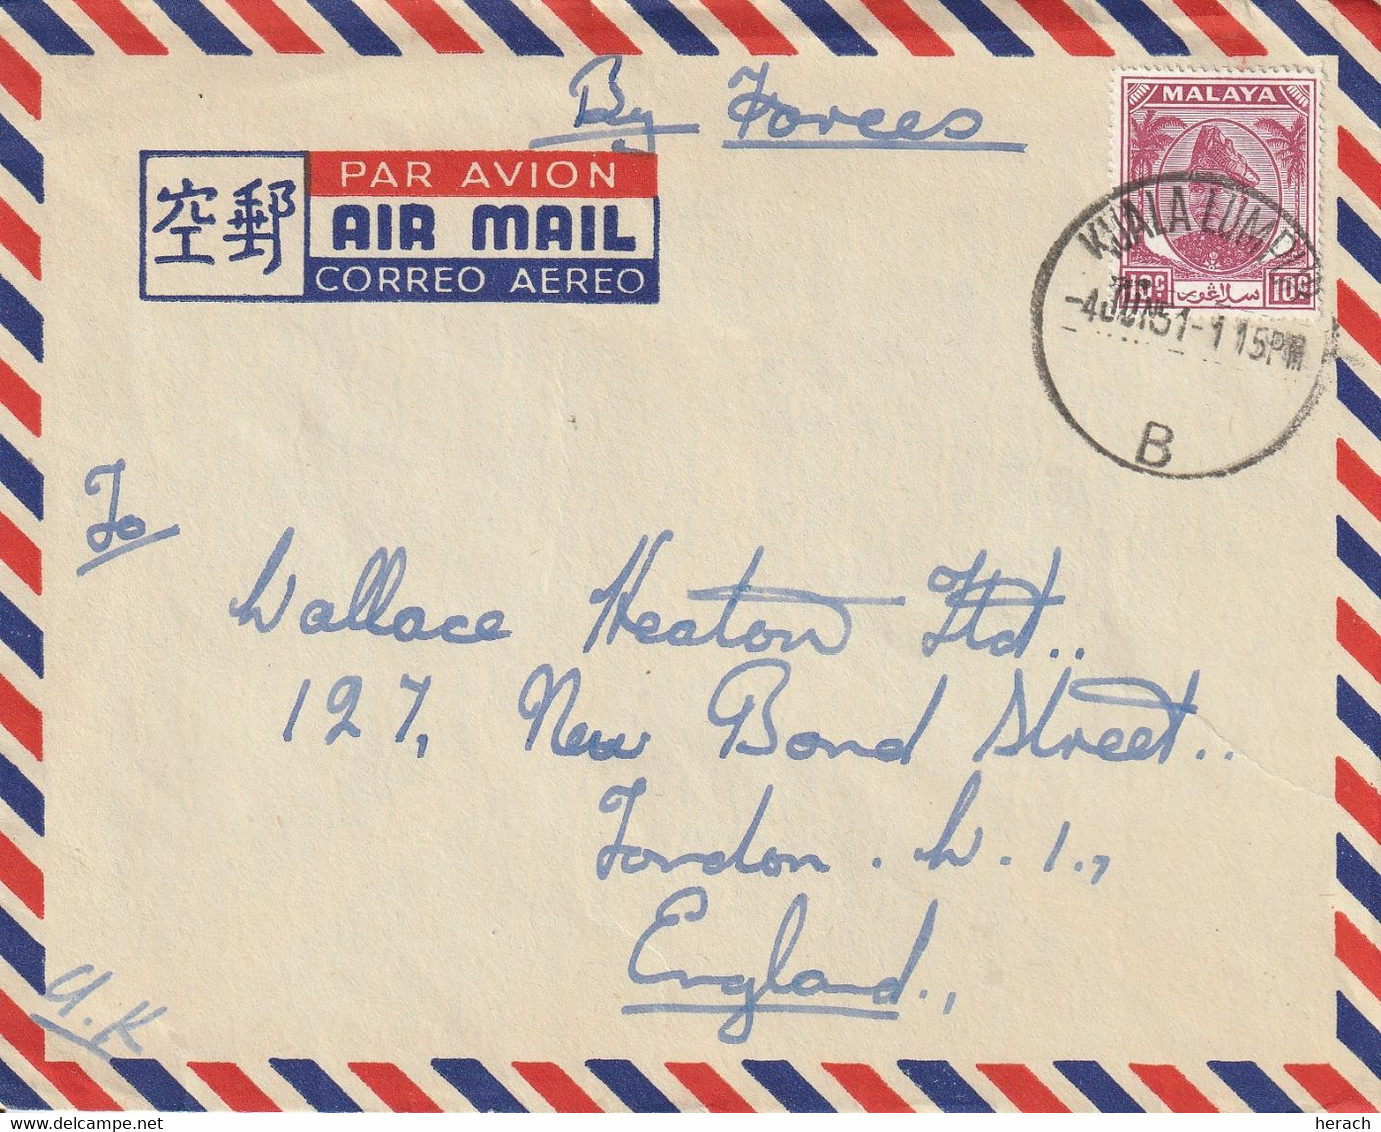 Malaisie Lettre Kuala Lumpur Pour L'Angleterre 1951 - Malaya (British Military Administration)